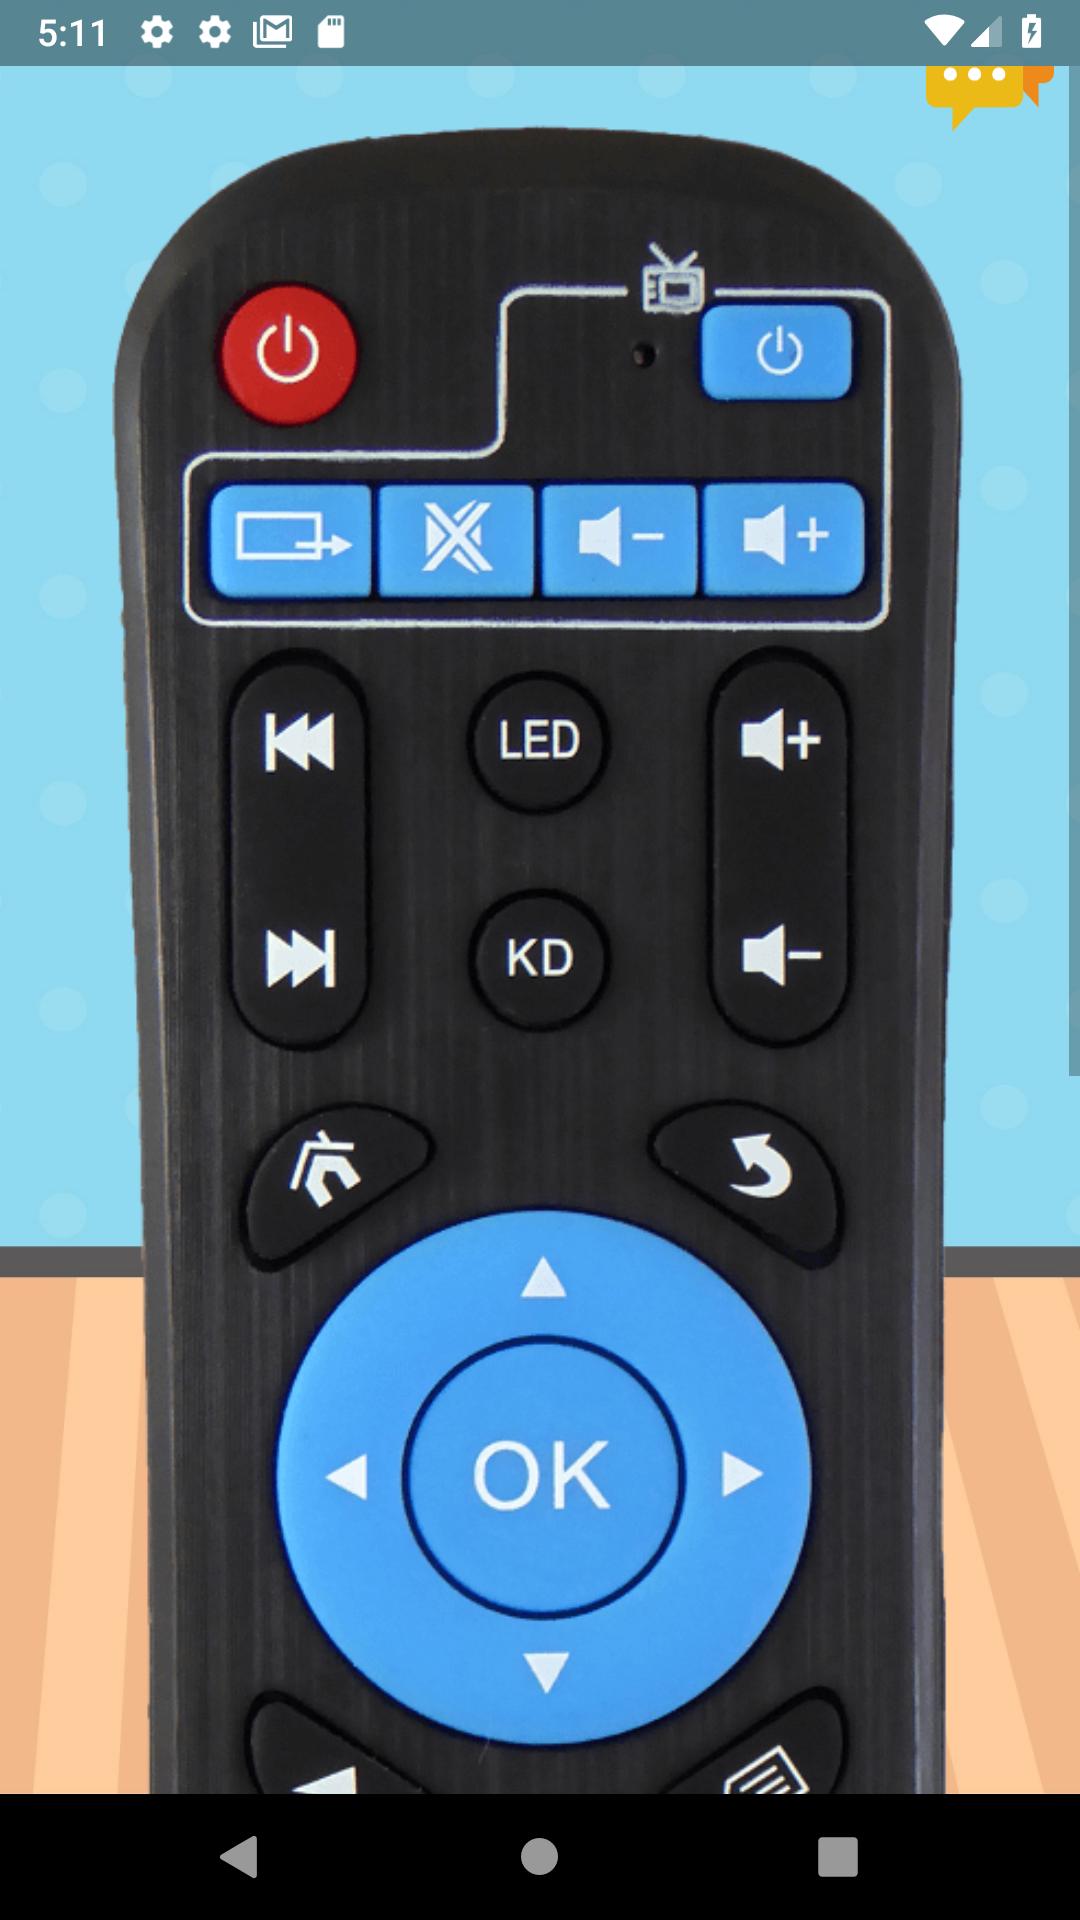 Gambar Remote Control TV Android